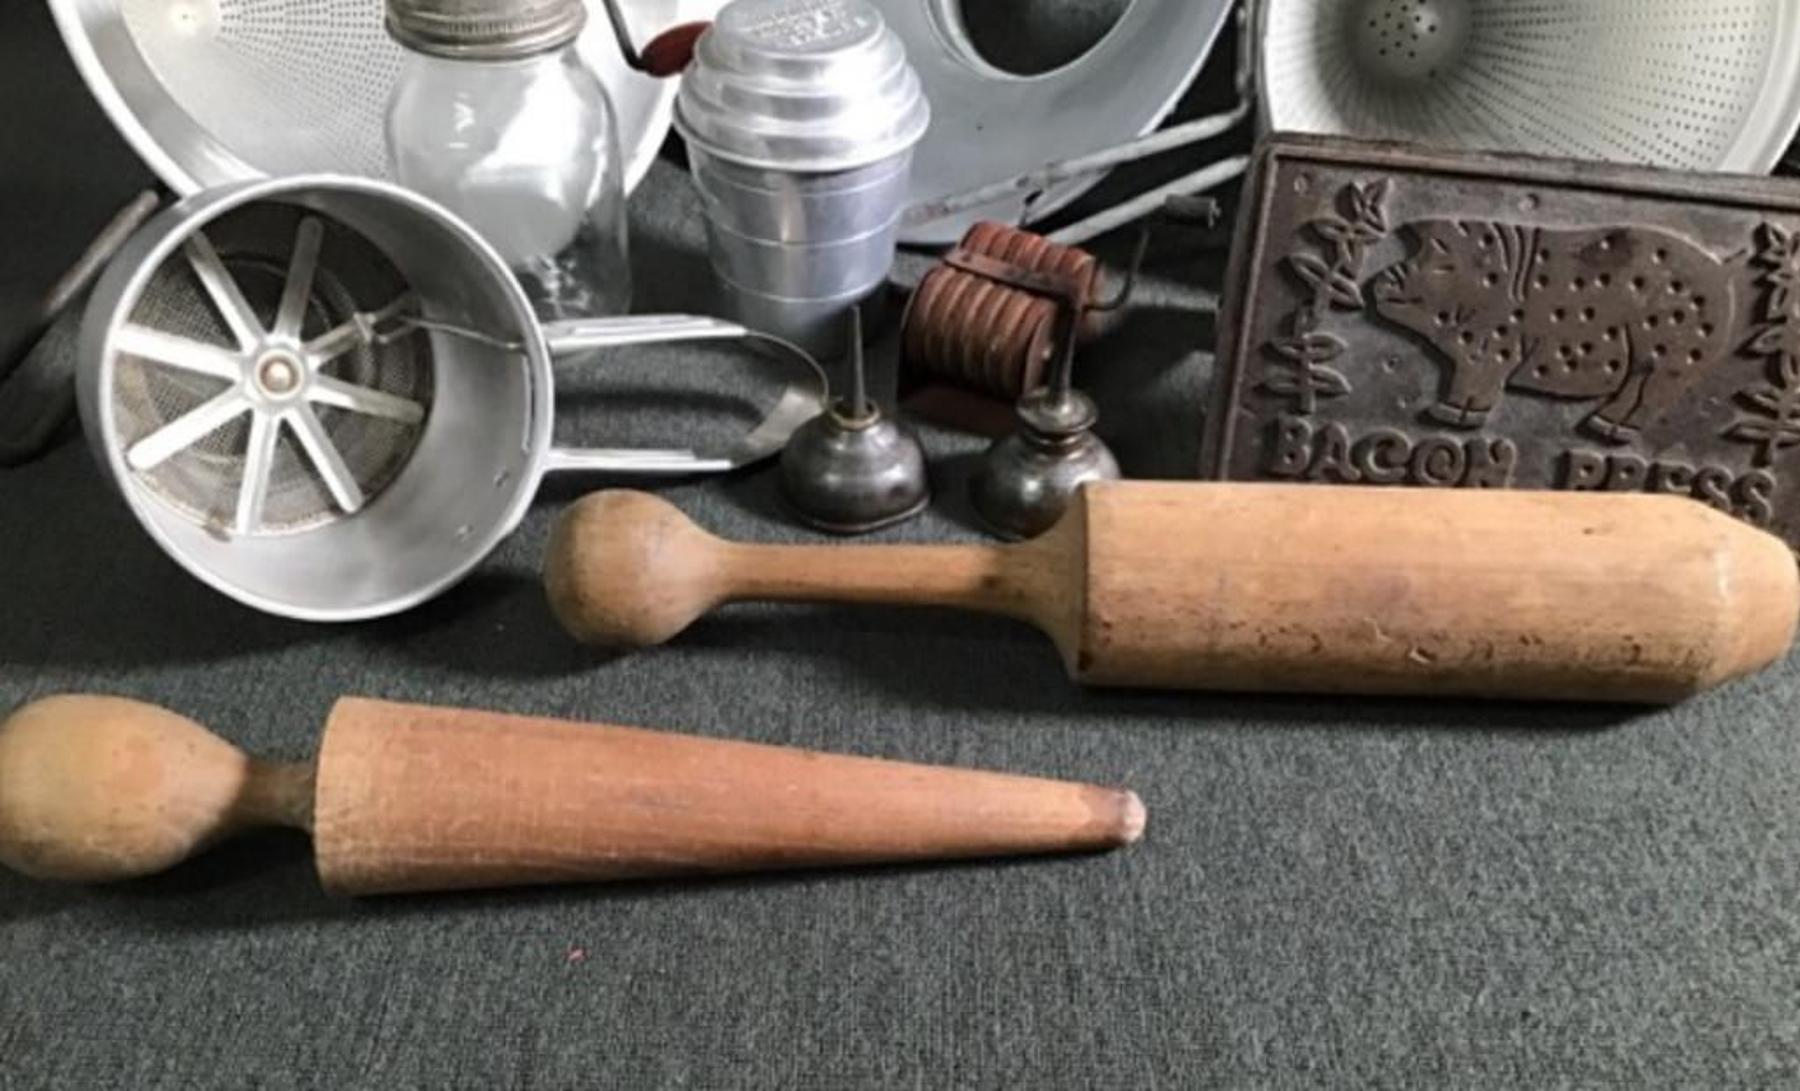 Image for Vintage Kitchen Items